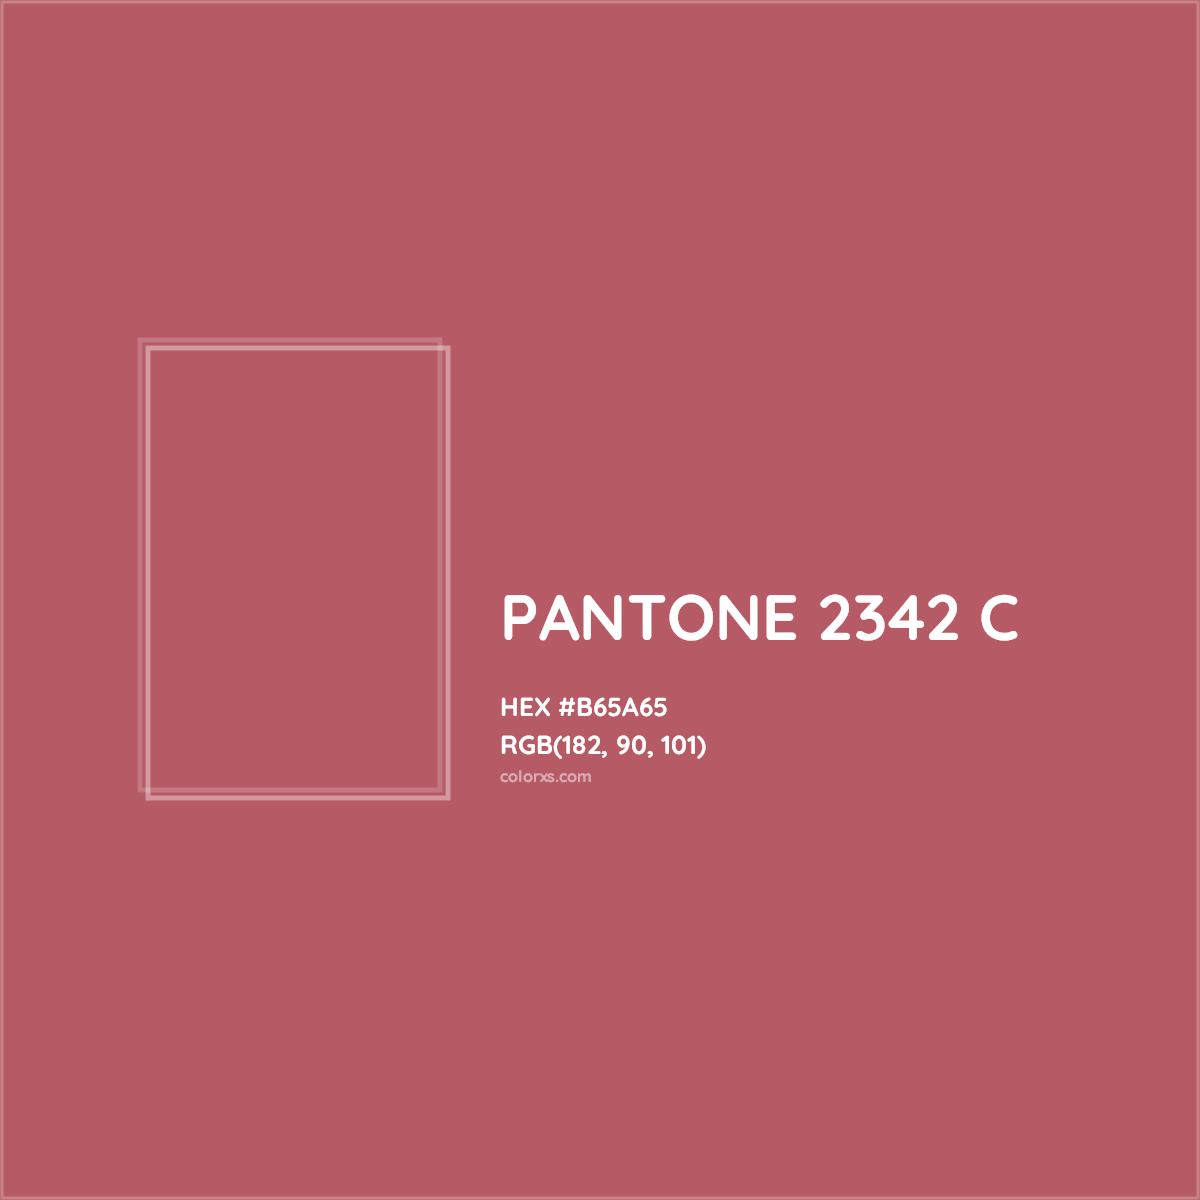 HEX #B65A65 PANTONE 2342 C CMS Pantone PMS - Color Code